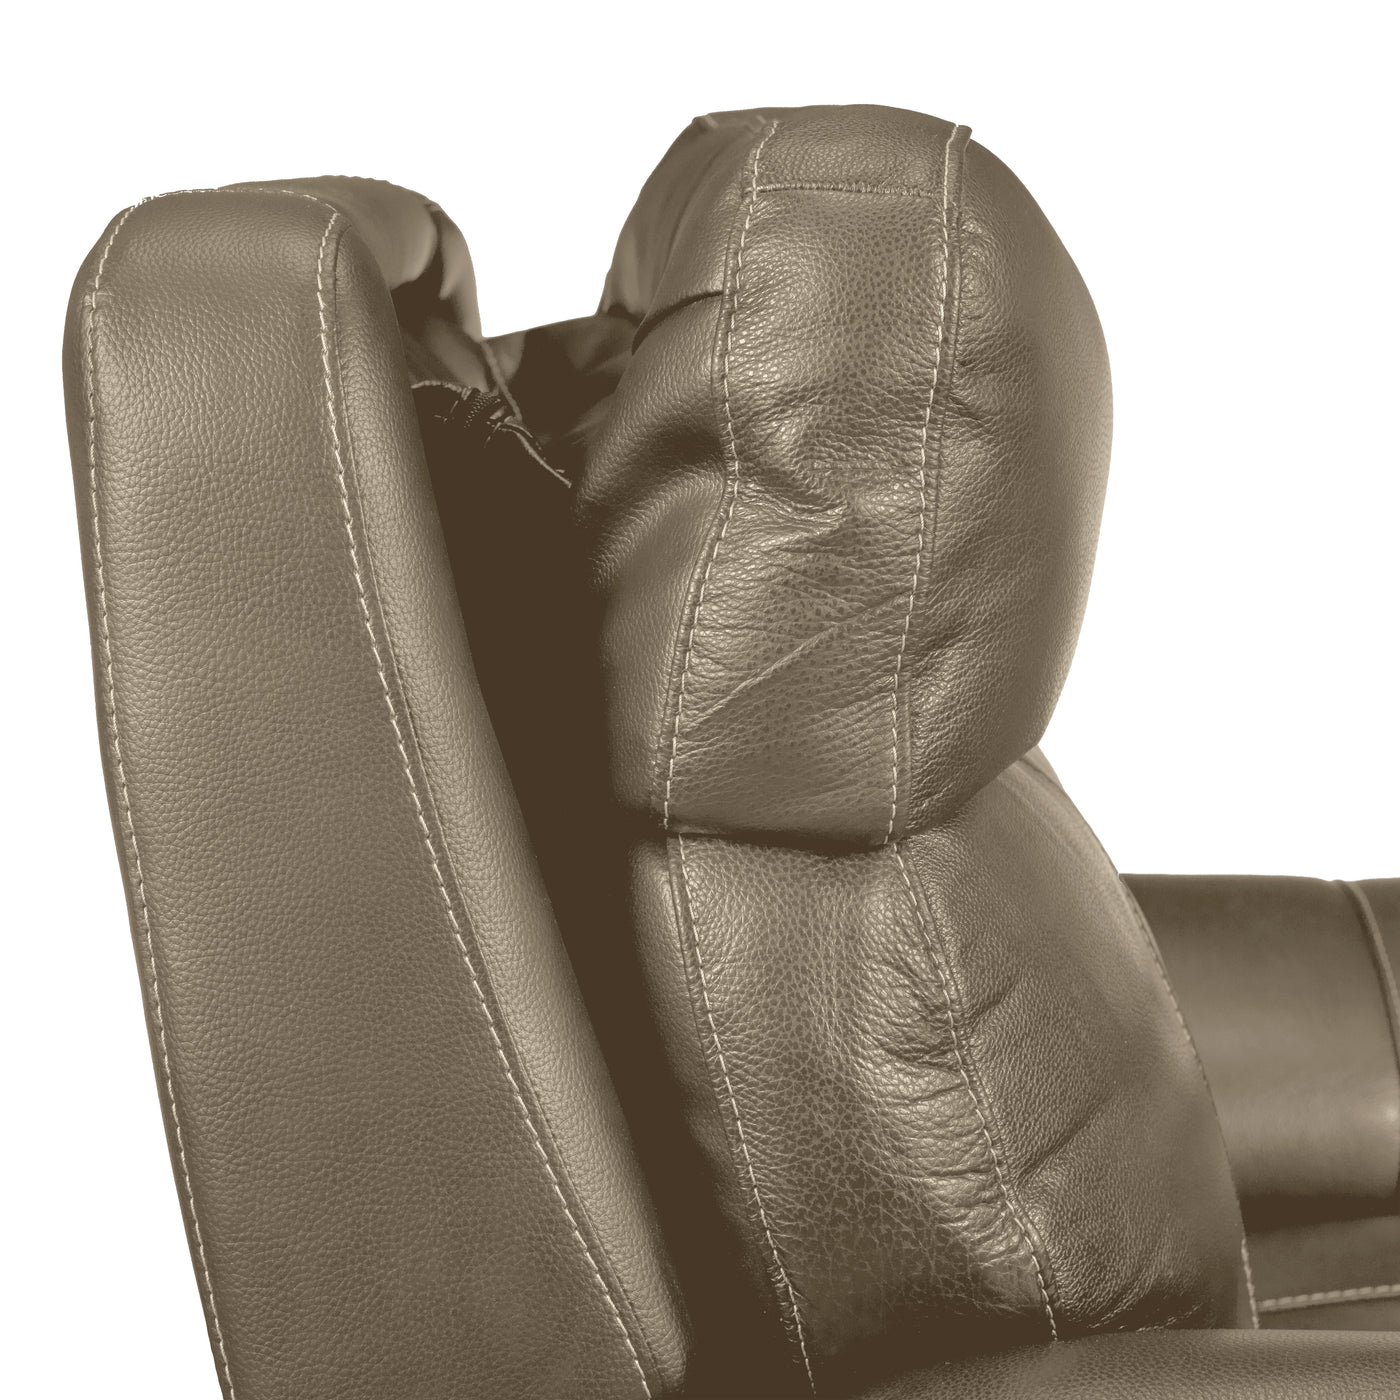 Stallion Leather Dual Power Reclining Sofa - Pebble